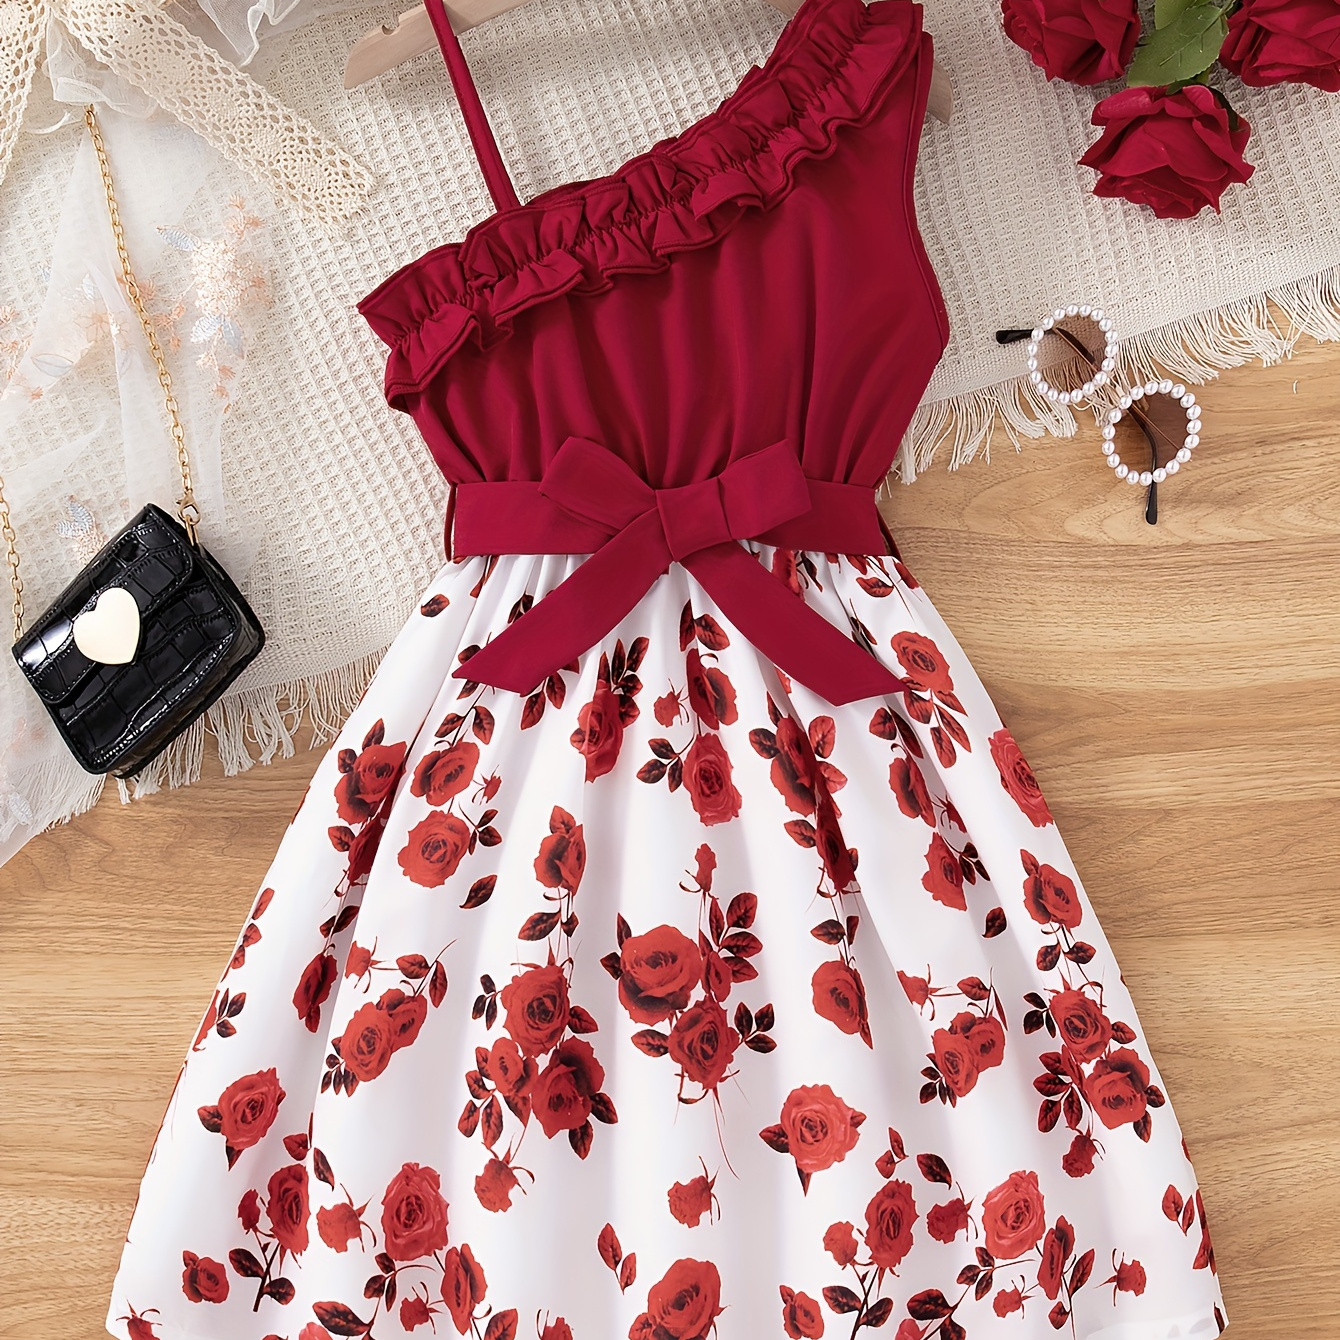 

Girl's Sweet Rose Floral Slant Shoulder Casual Dress Comfy Holiday Going Out Summer Dresses